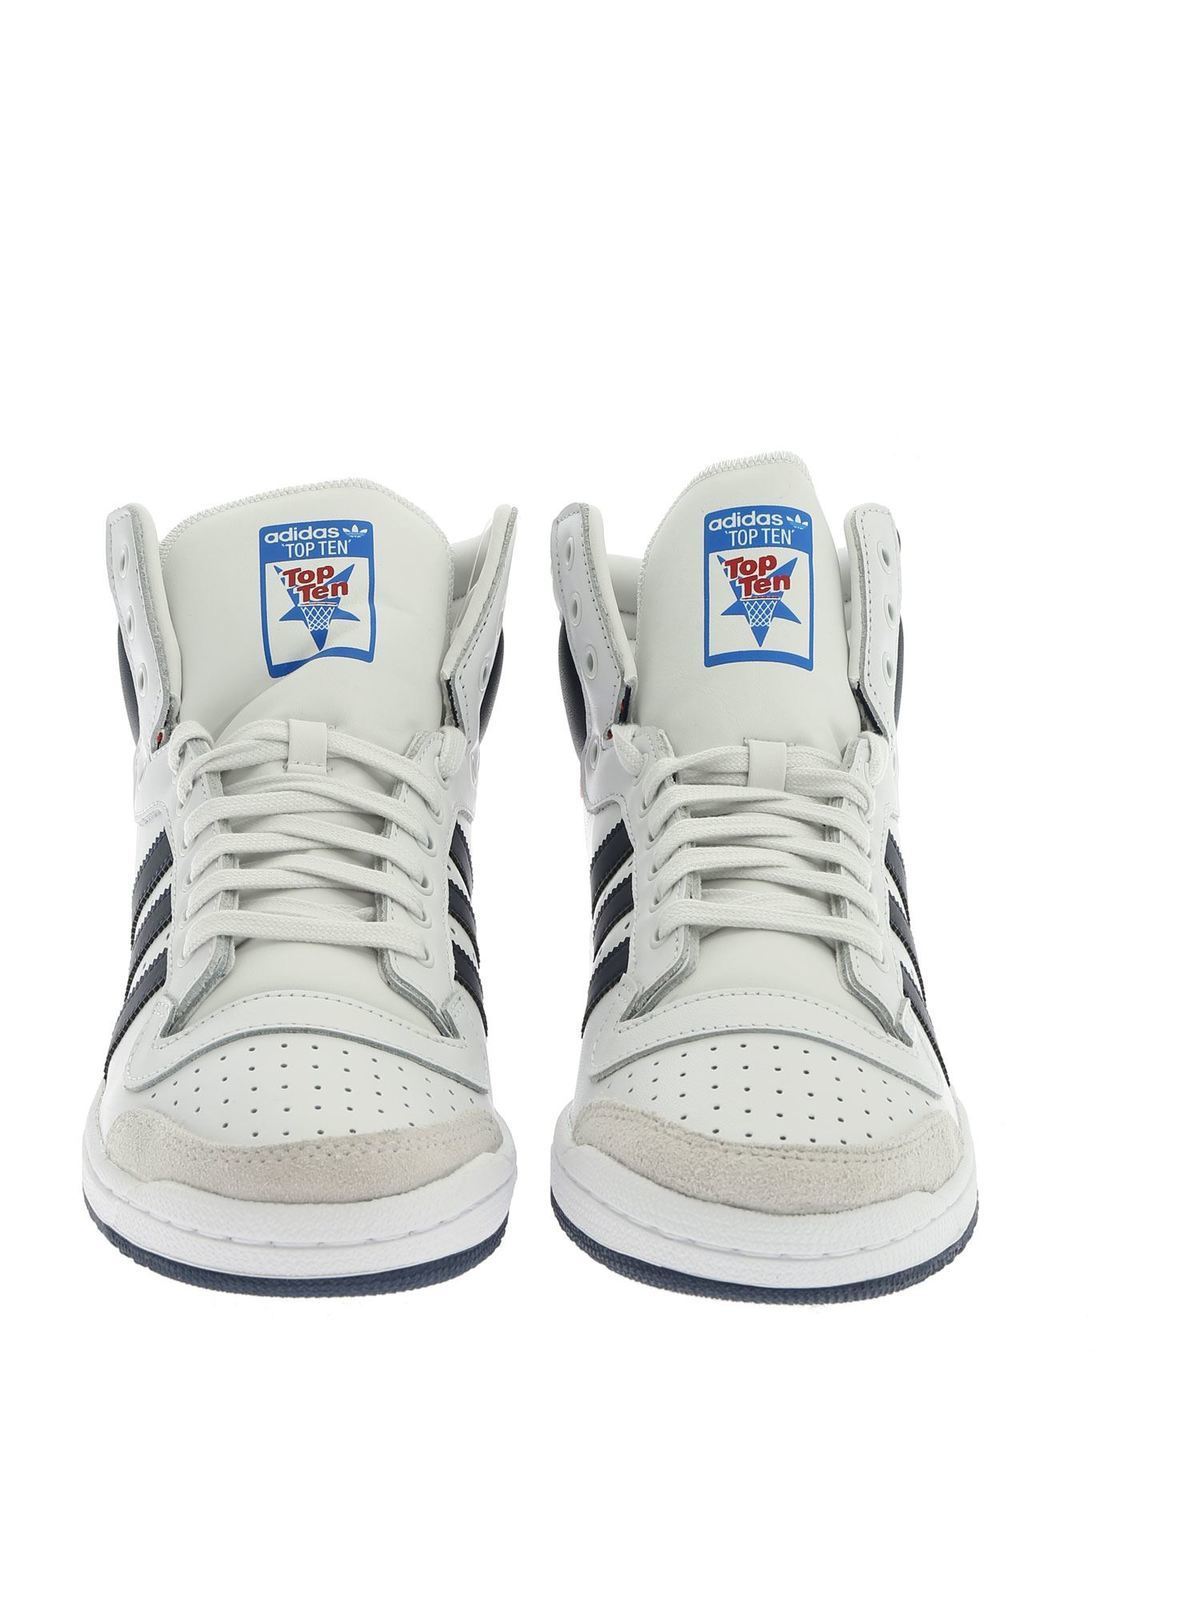 Trainers Adidas Originals - Top Ten Hi sneakers in white -